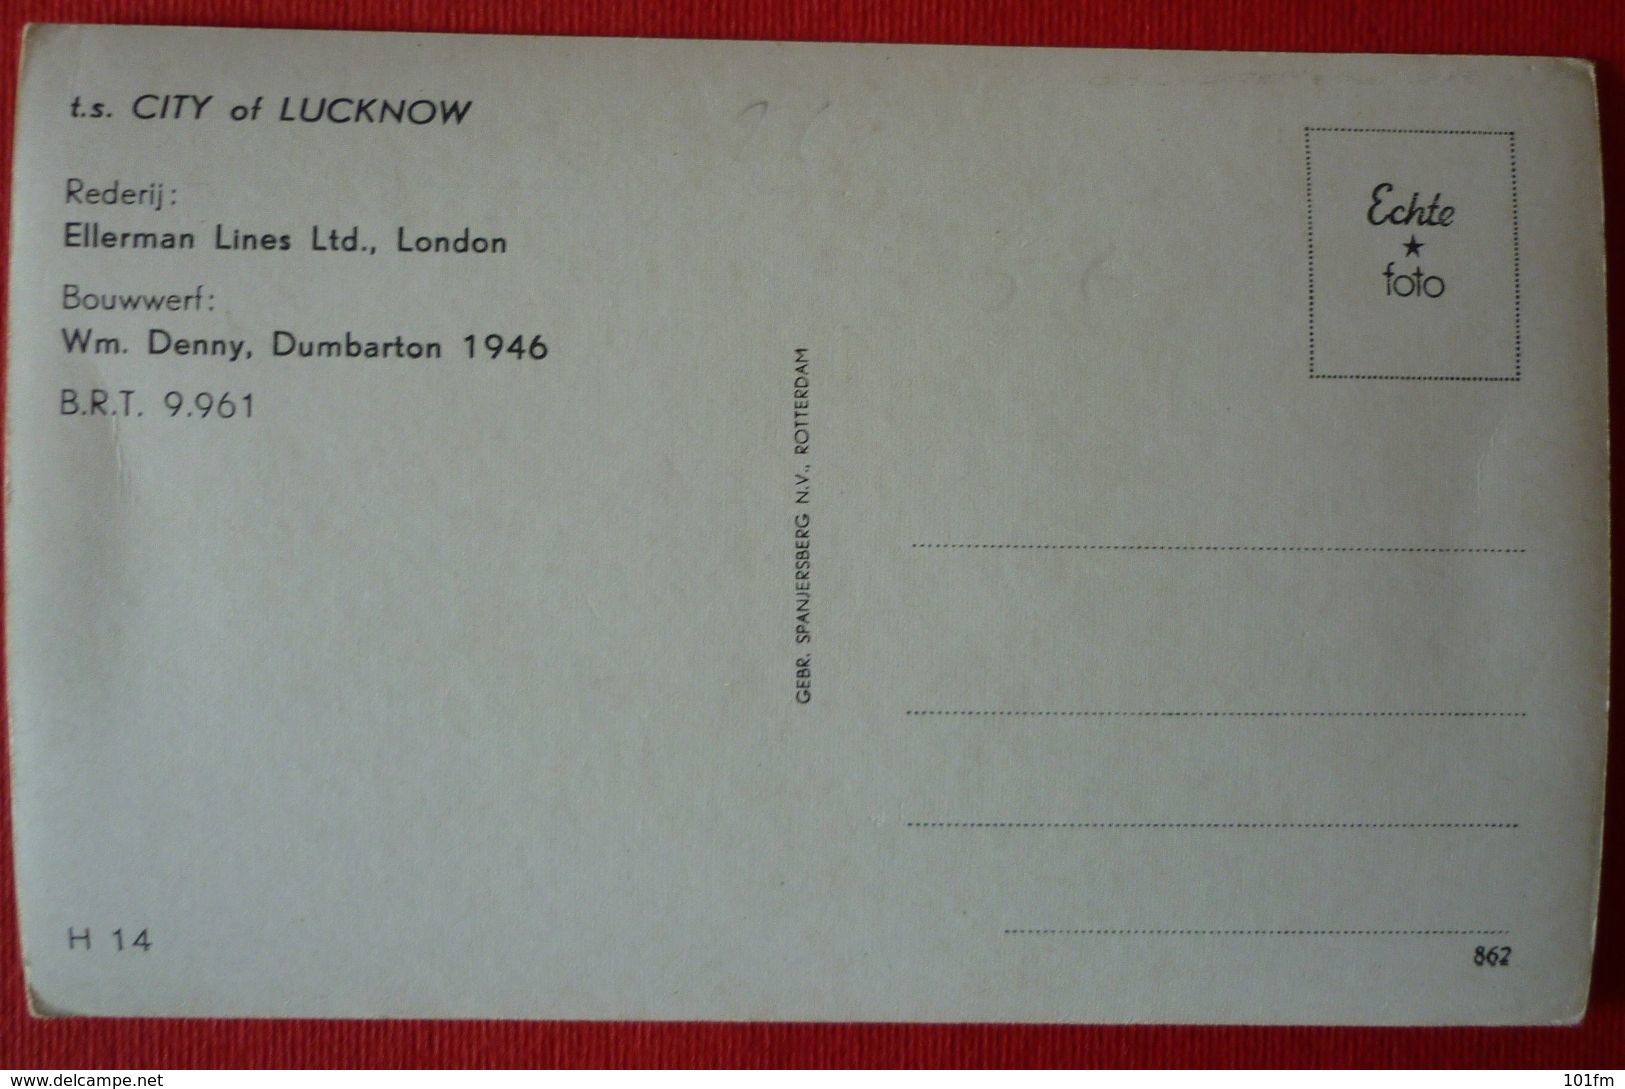 T.S. CITY OF LUCKNOW - ELLERMAN LINES LTD. LONDON - Steamers